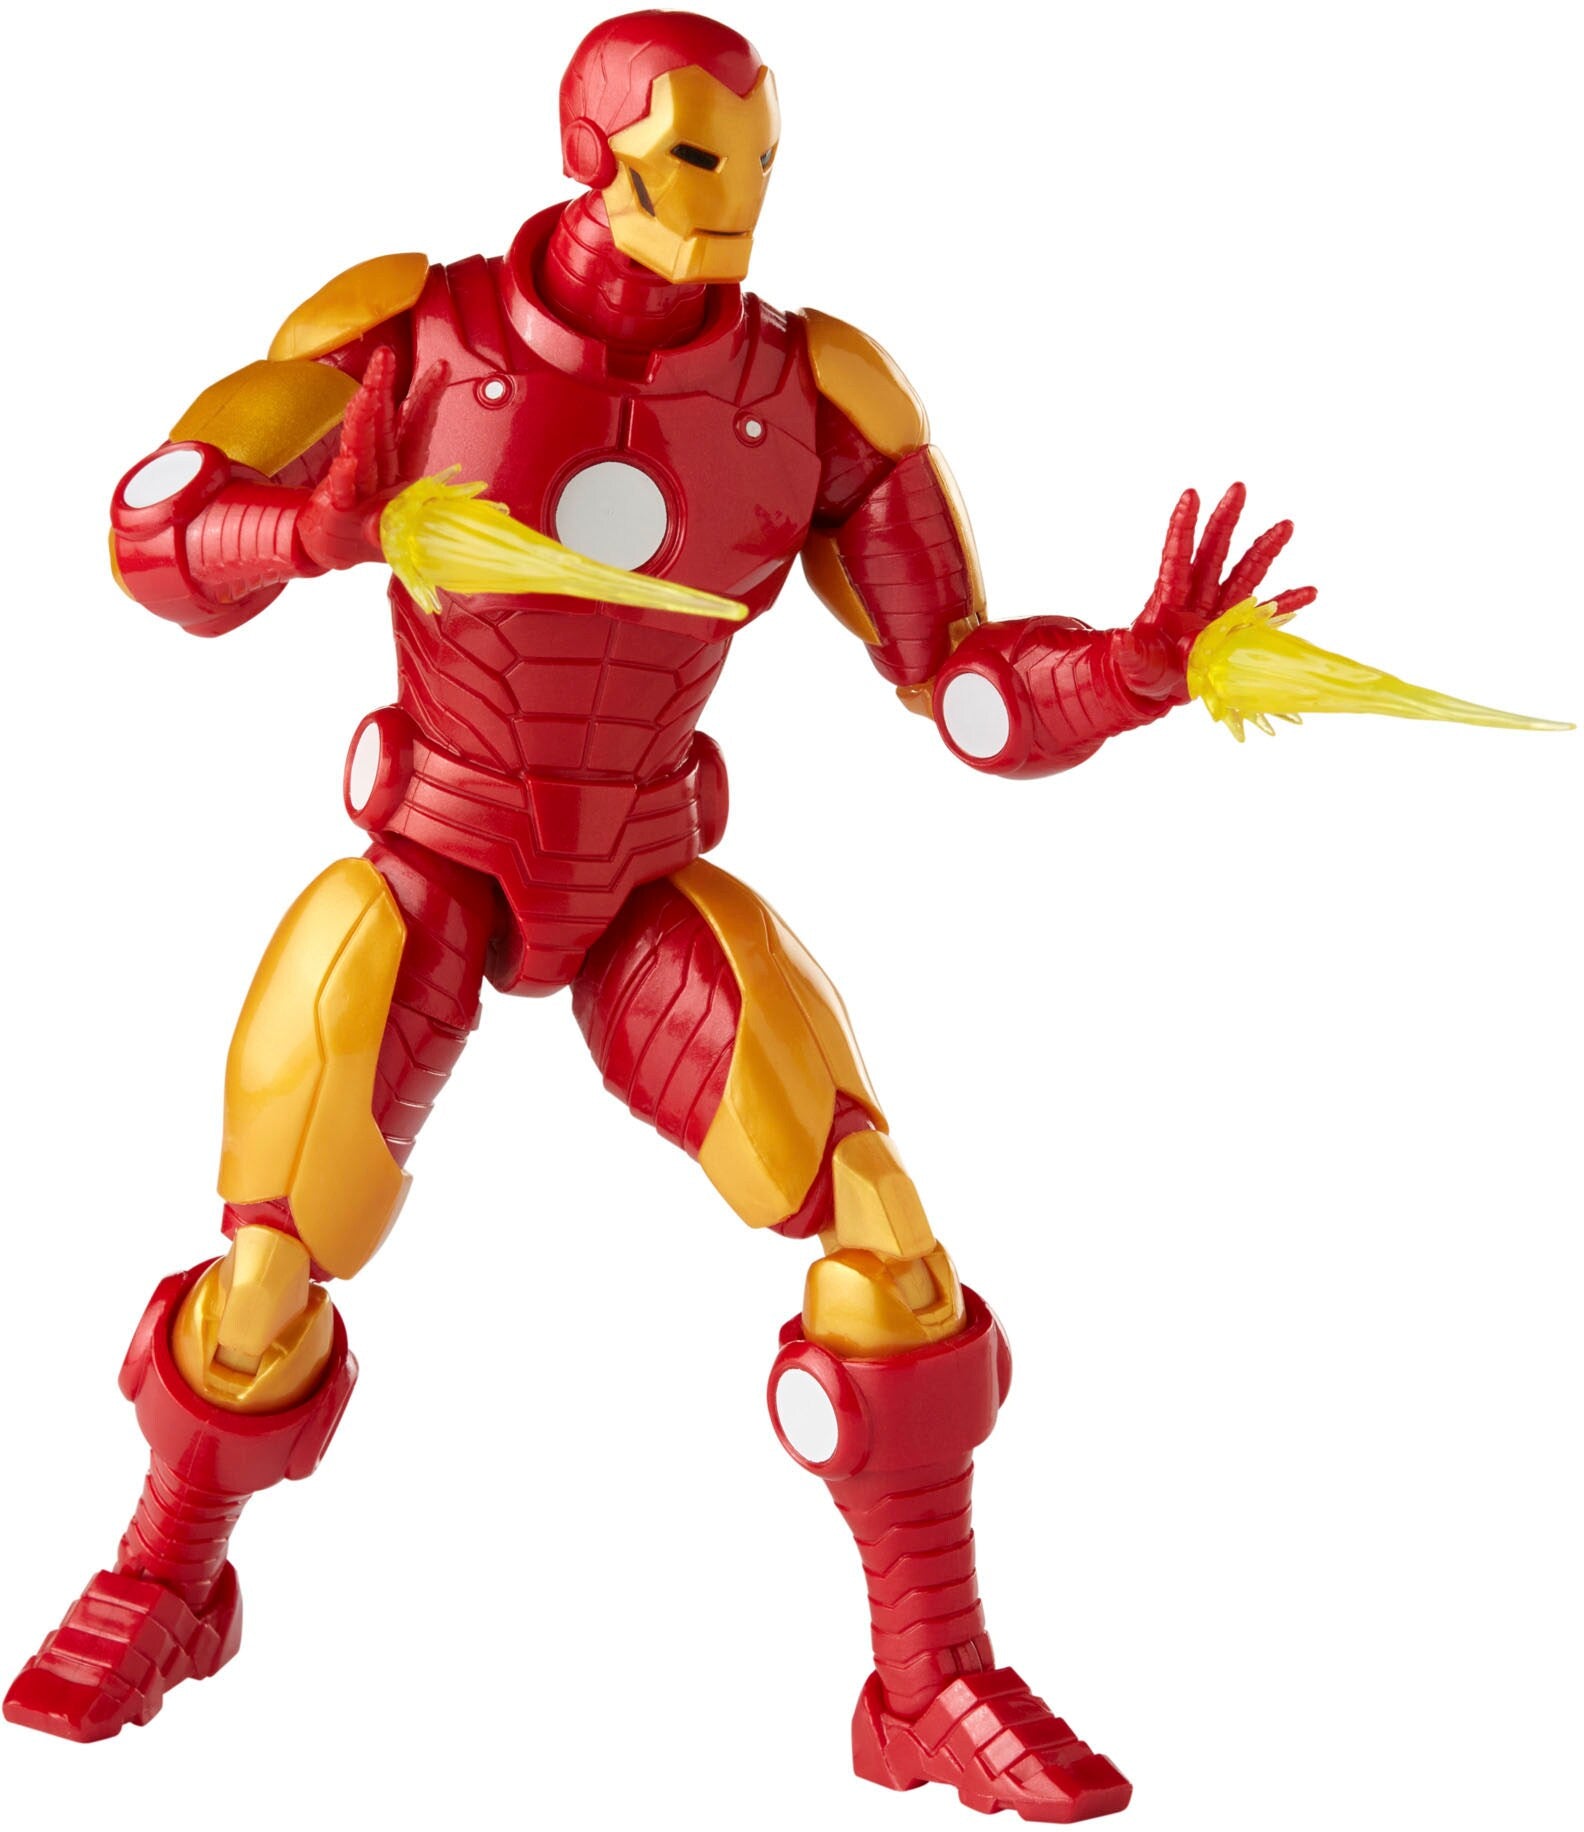 Marvel Legends Iron Man Model 70